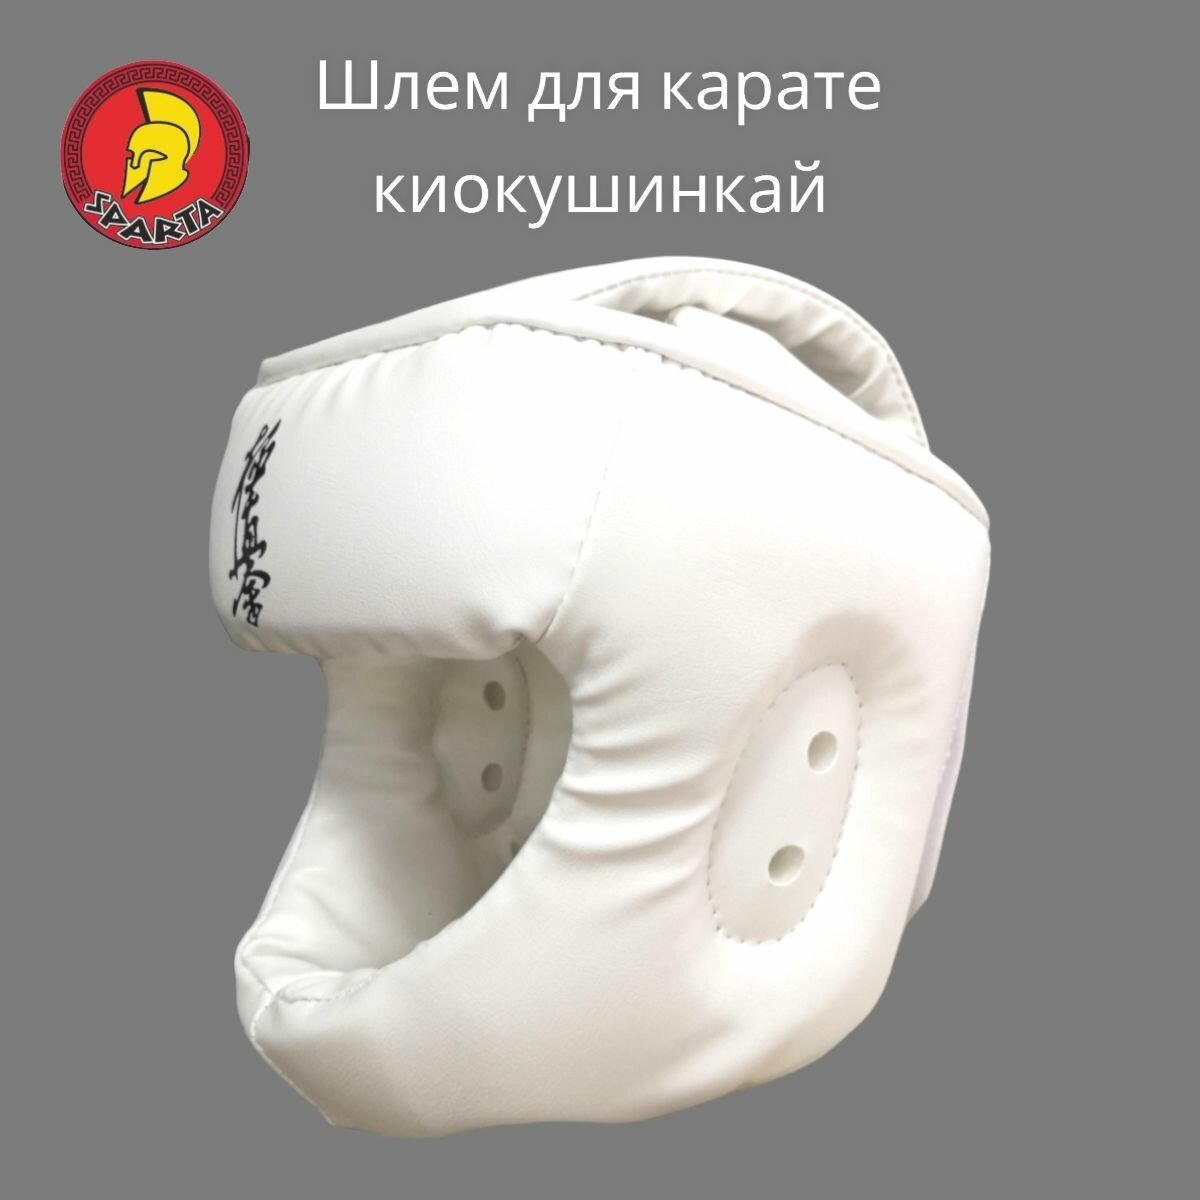 Шлем для каратэ Киокушинкай "Боец" р. M